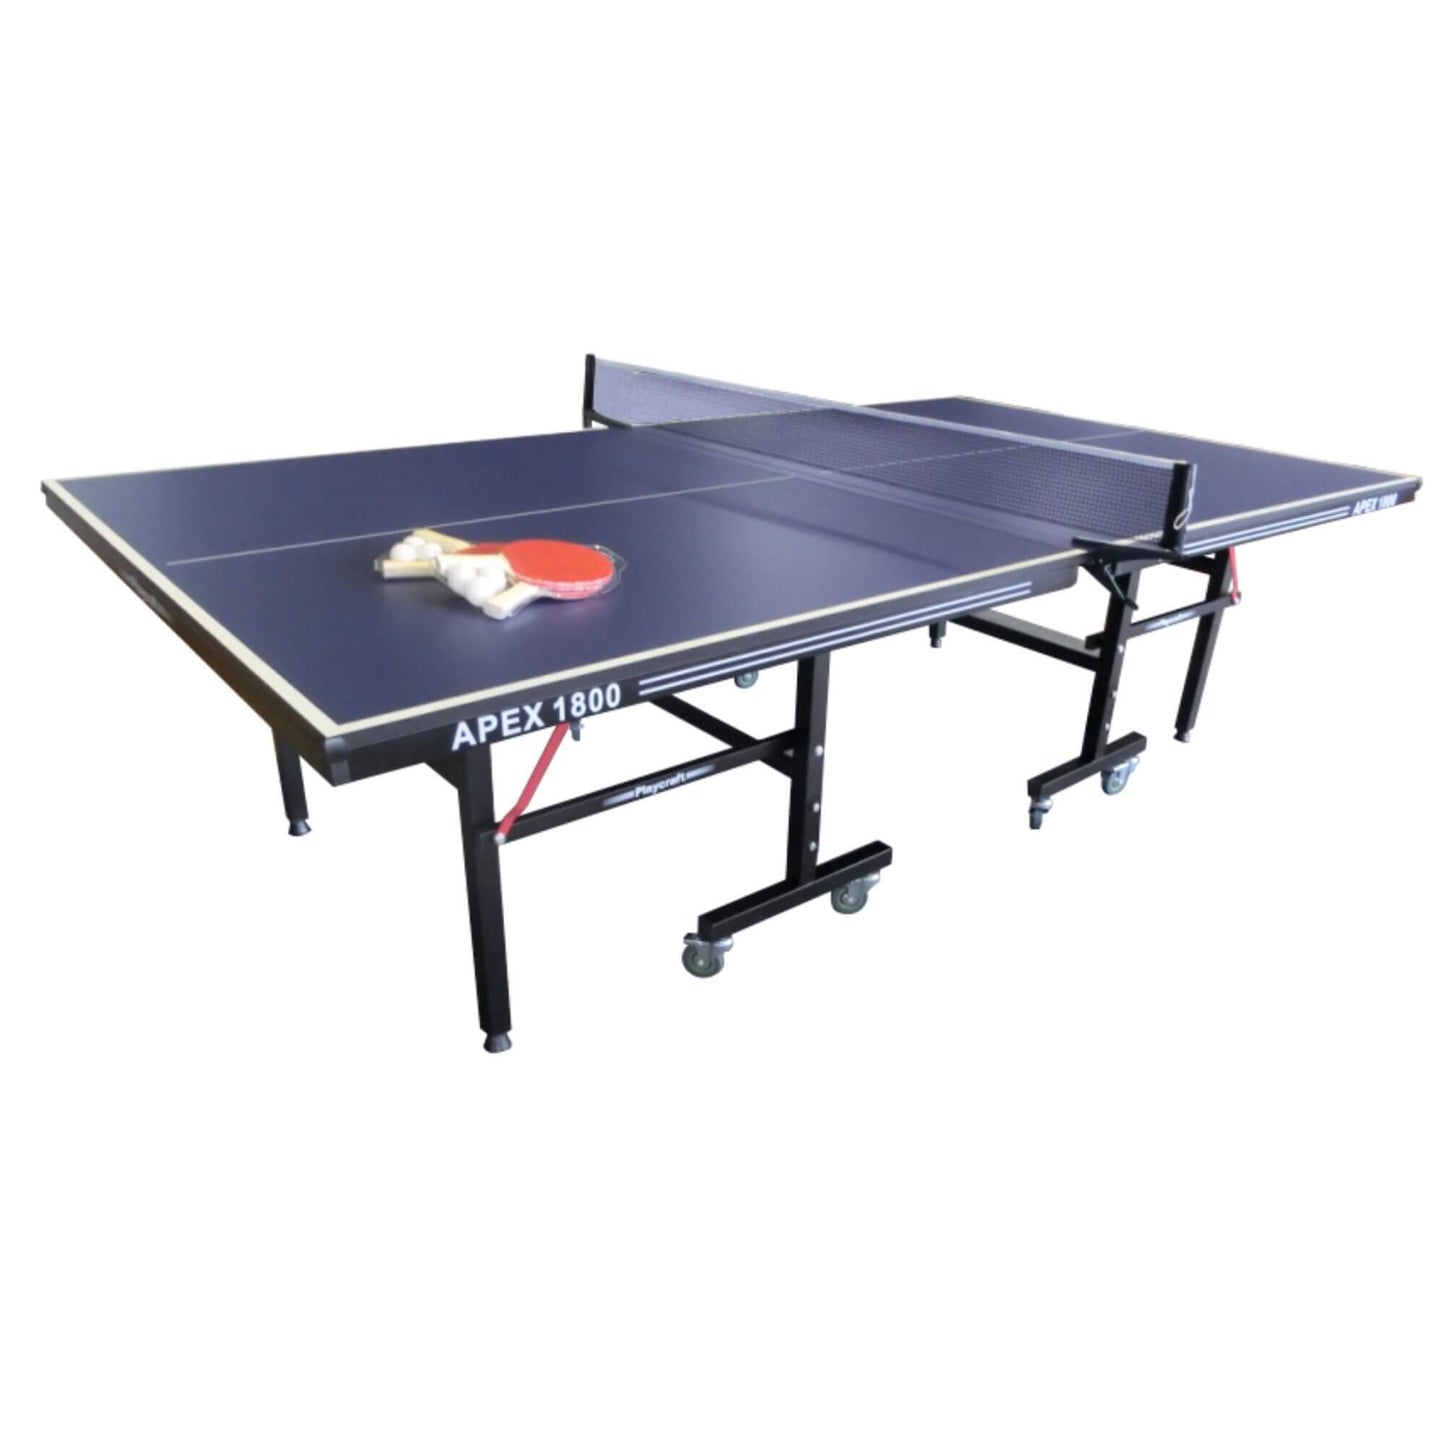 Playcraft Apex 1800 Indoor 9' Table Tennis Table - Gaming Blaze